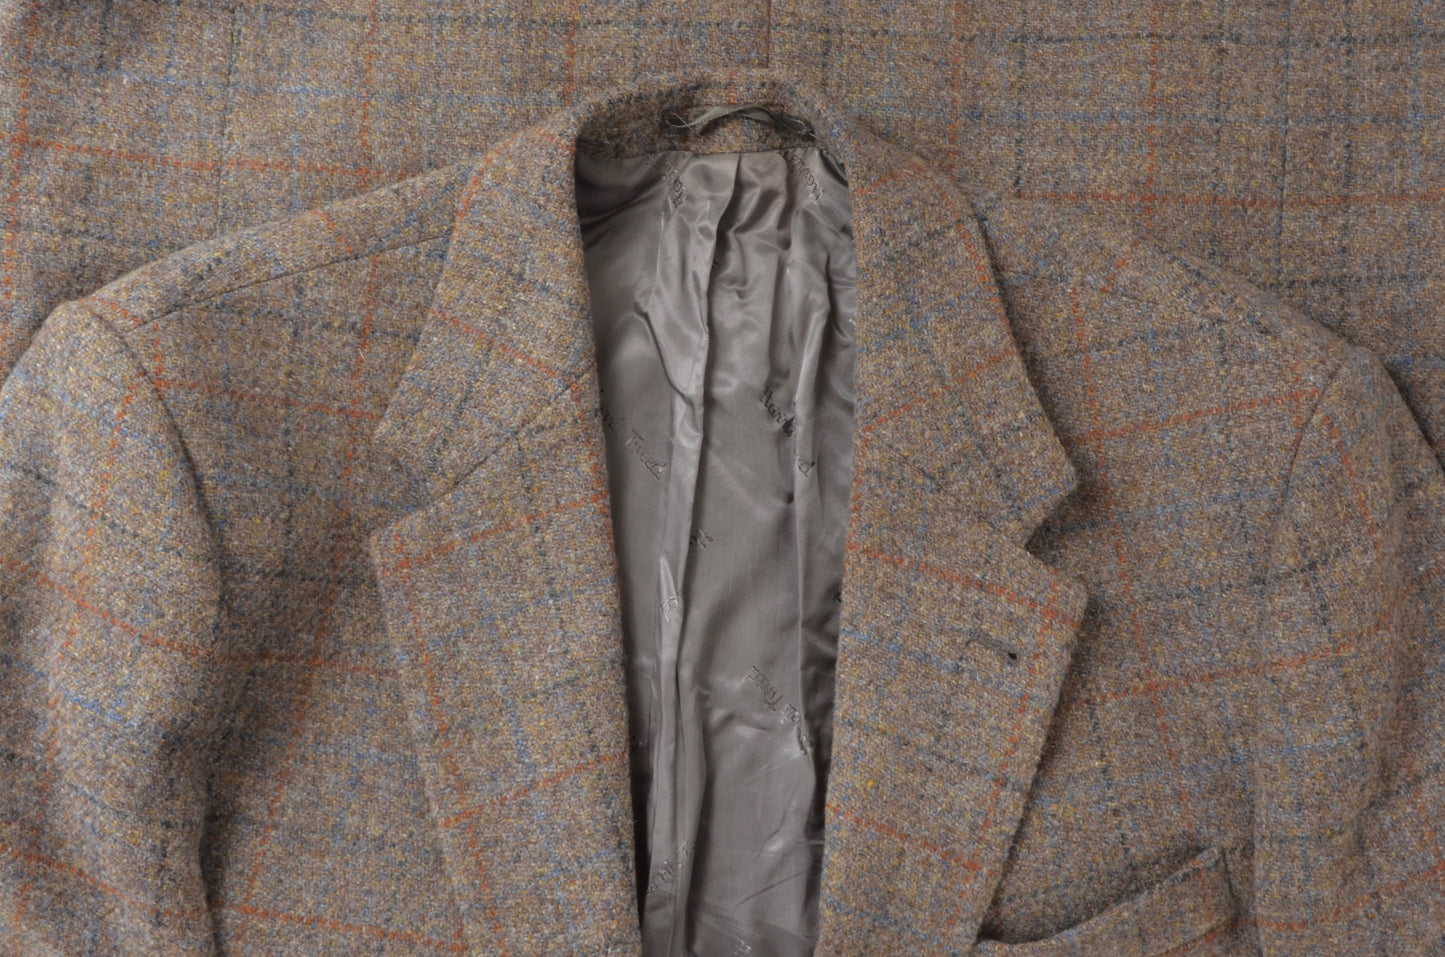 Harris Tweed Walbusch Wool Jacket Size 52 - Grey